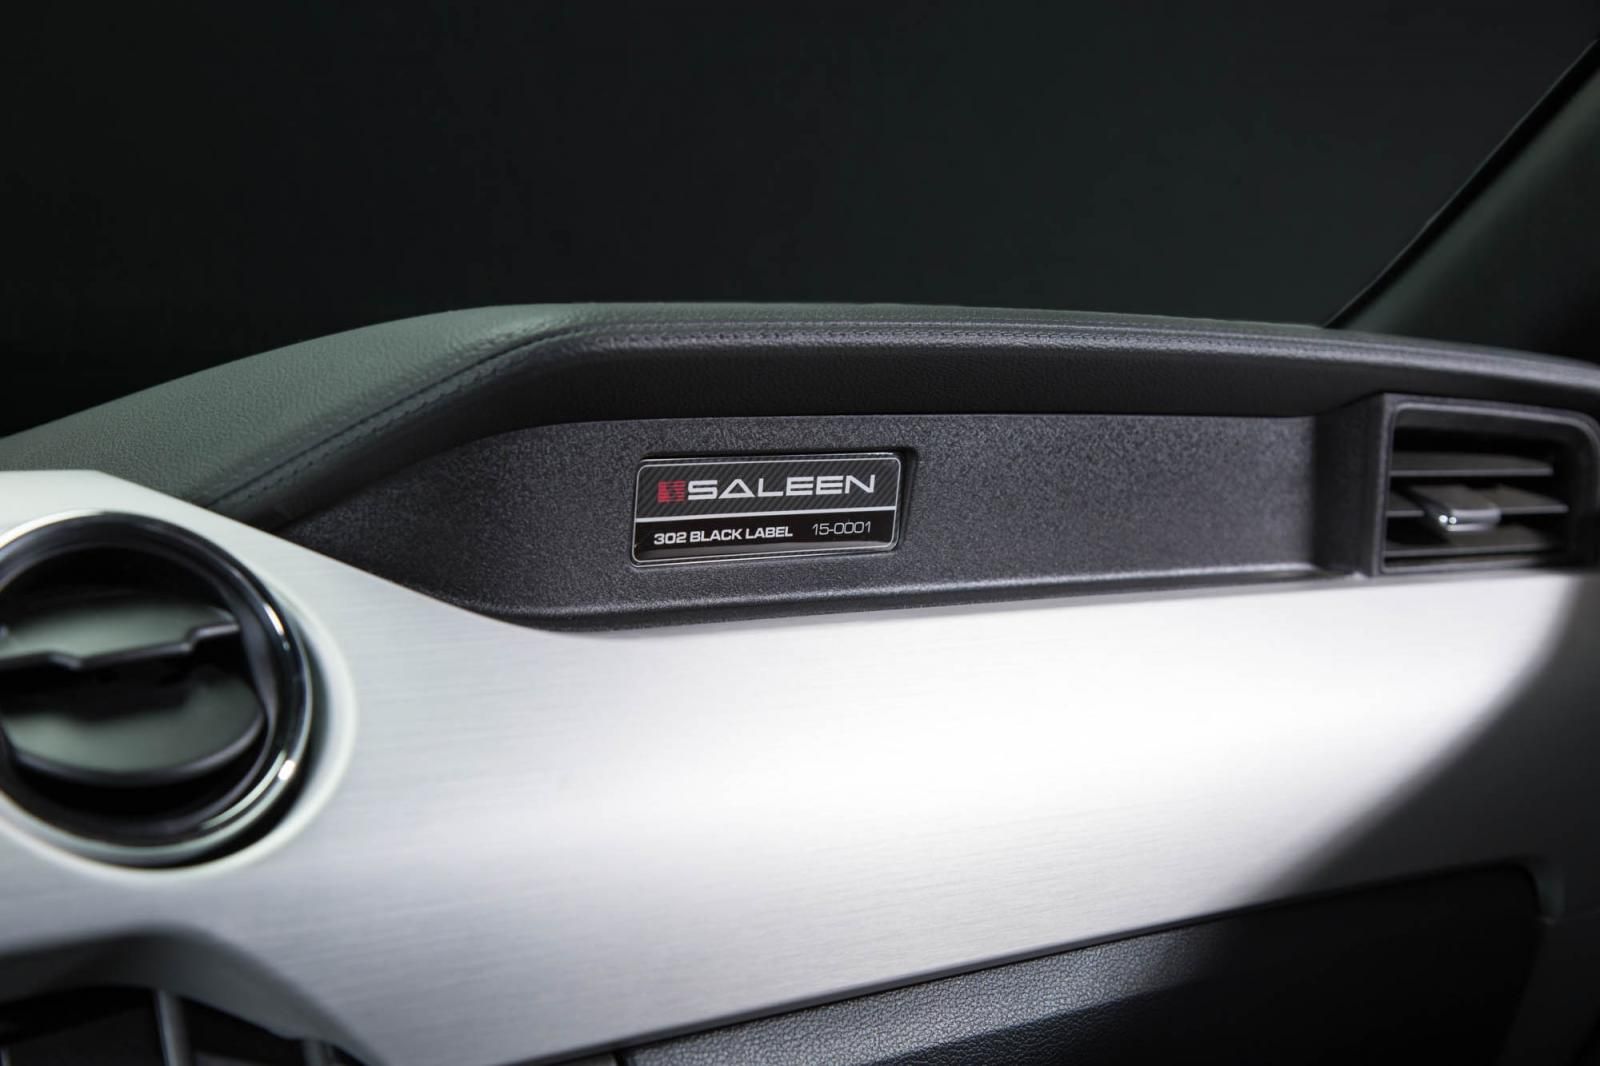 2015 Saleen S302 Black Label